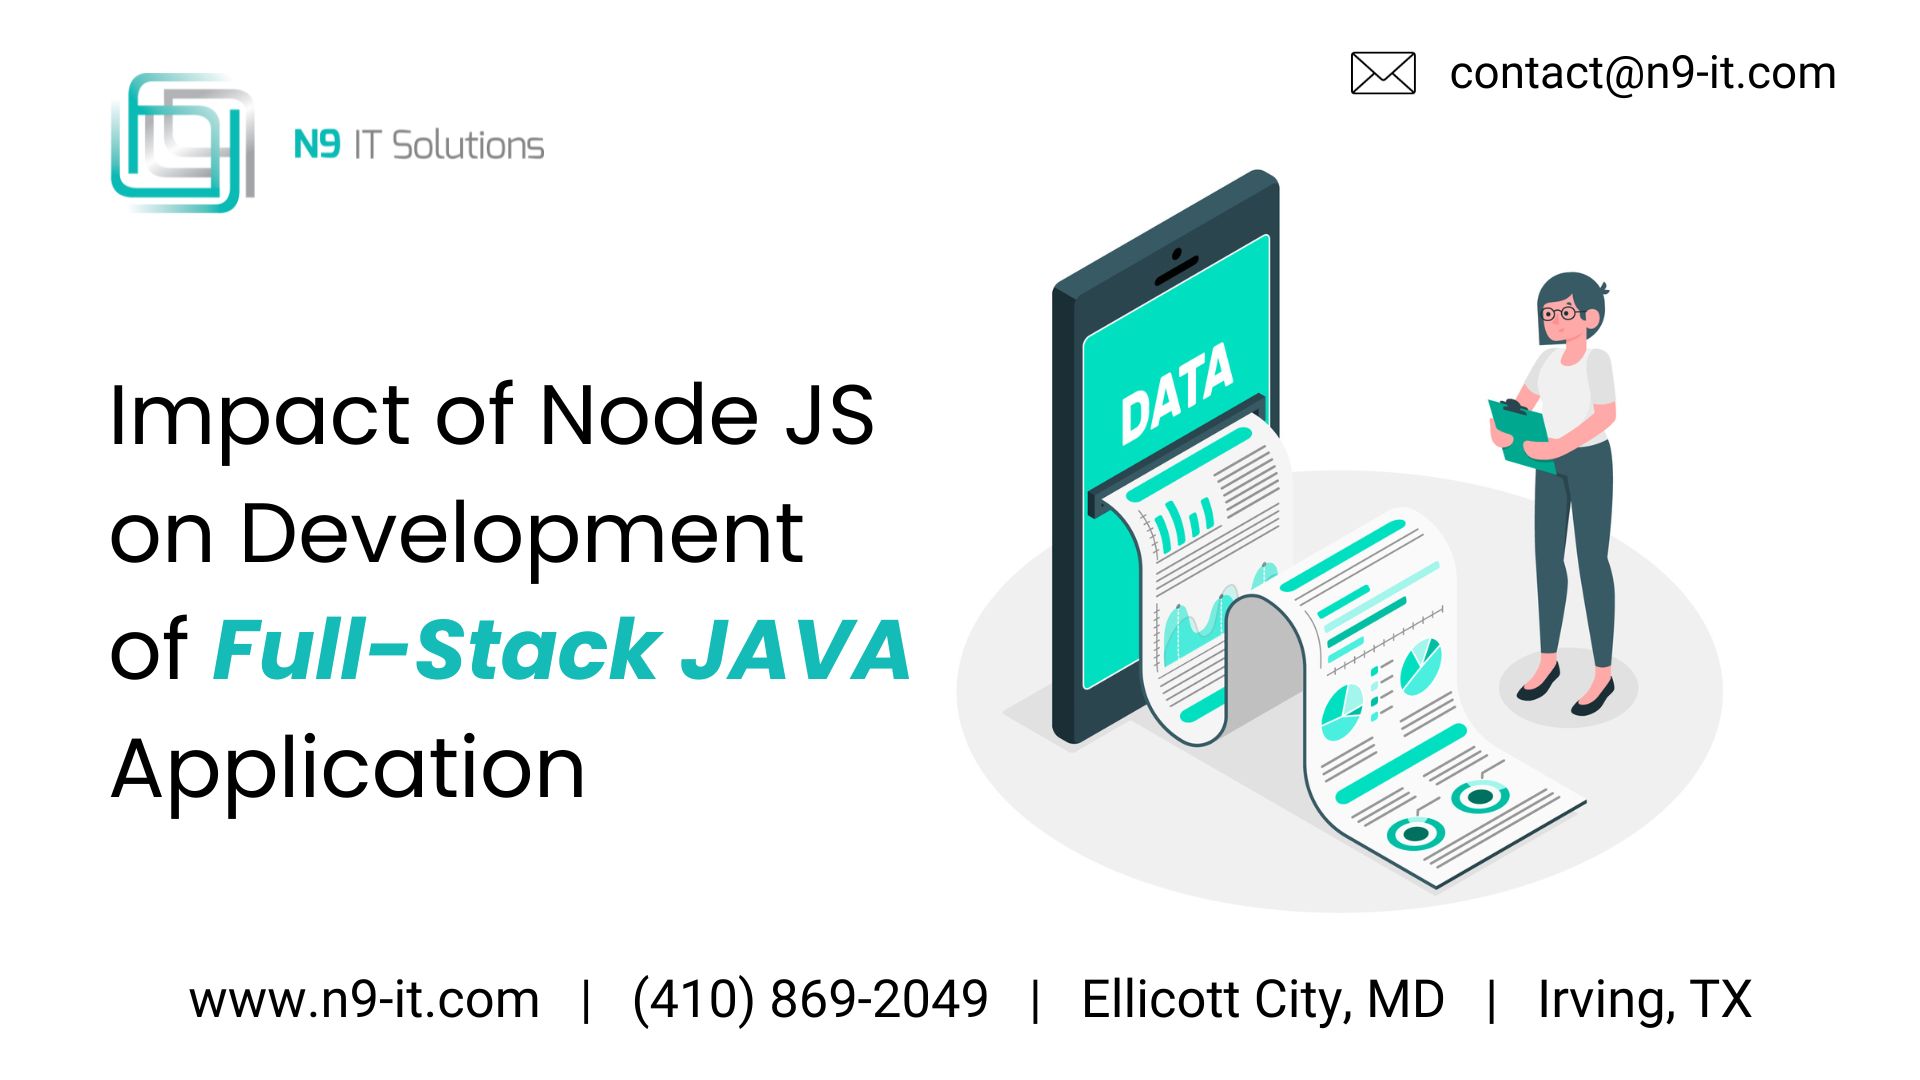 Impact of Node JS on Full-Stack JAVA Application